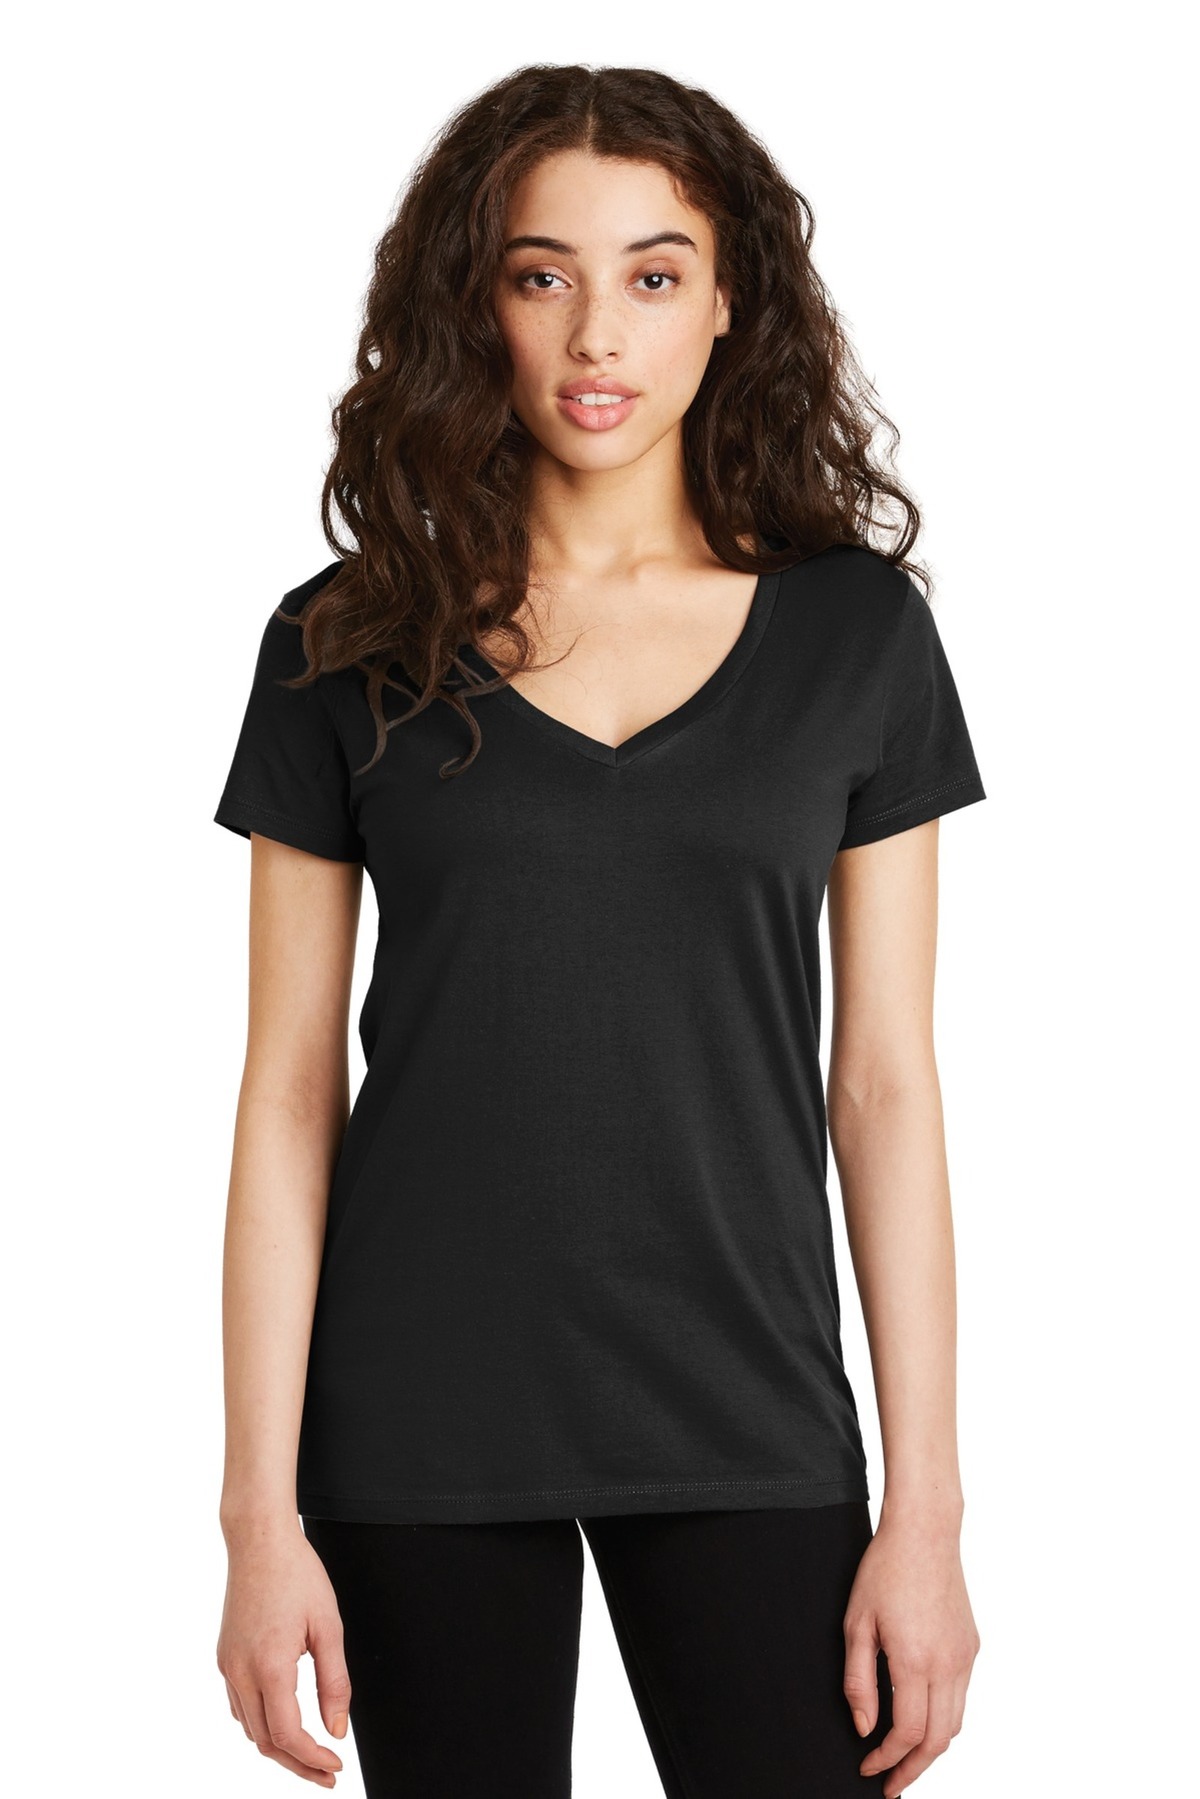 Alternative Embroidered Women's Legacy V-Neck T-Shirt | Custom ...